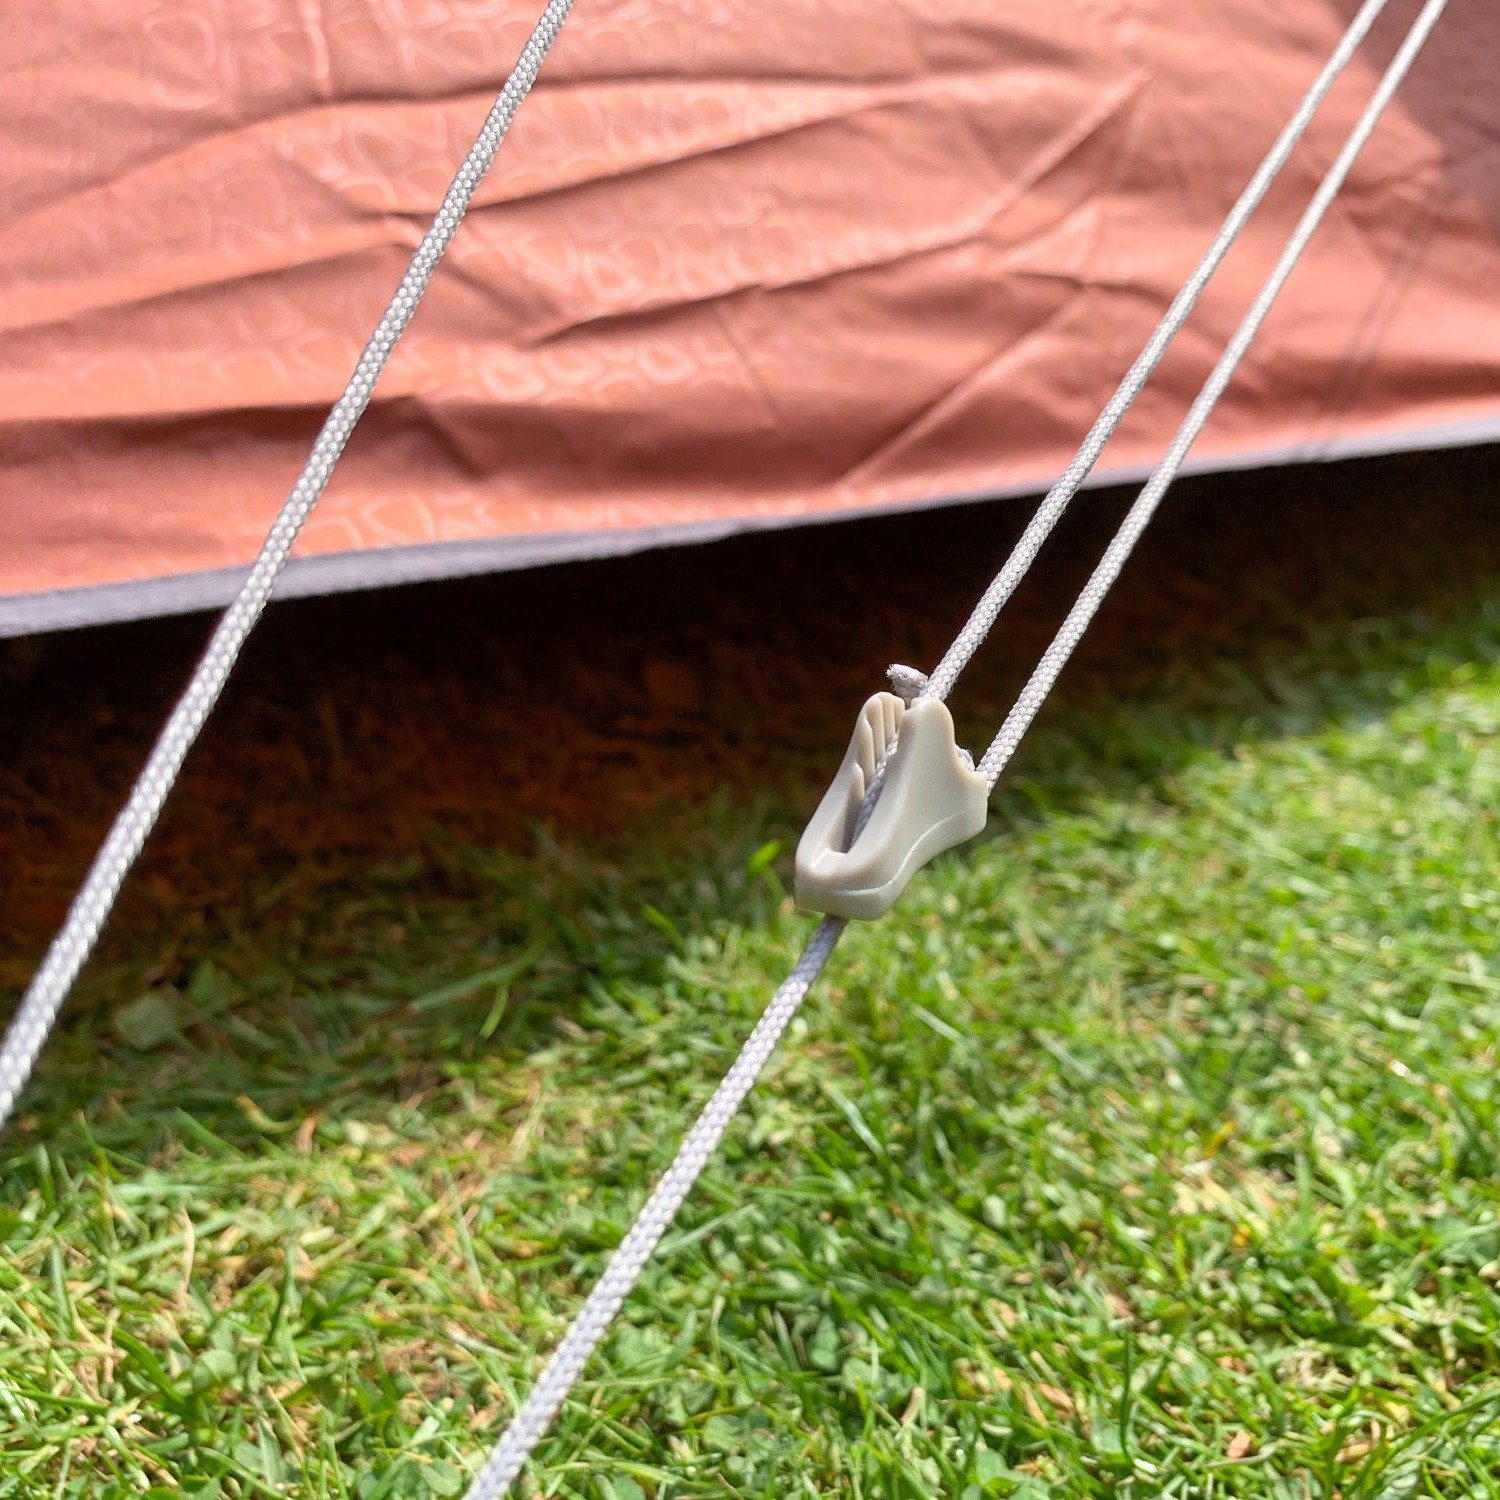 Robens Pioneer 3EX Lightweight Hiking Tent